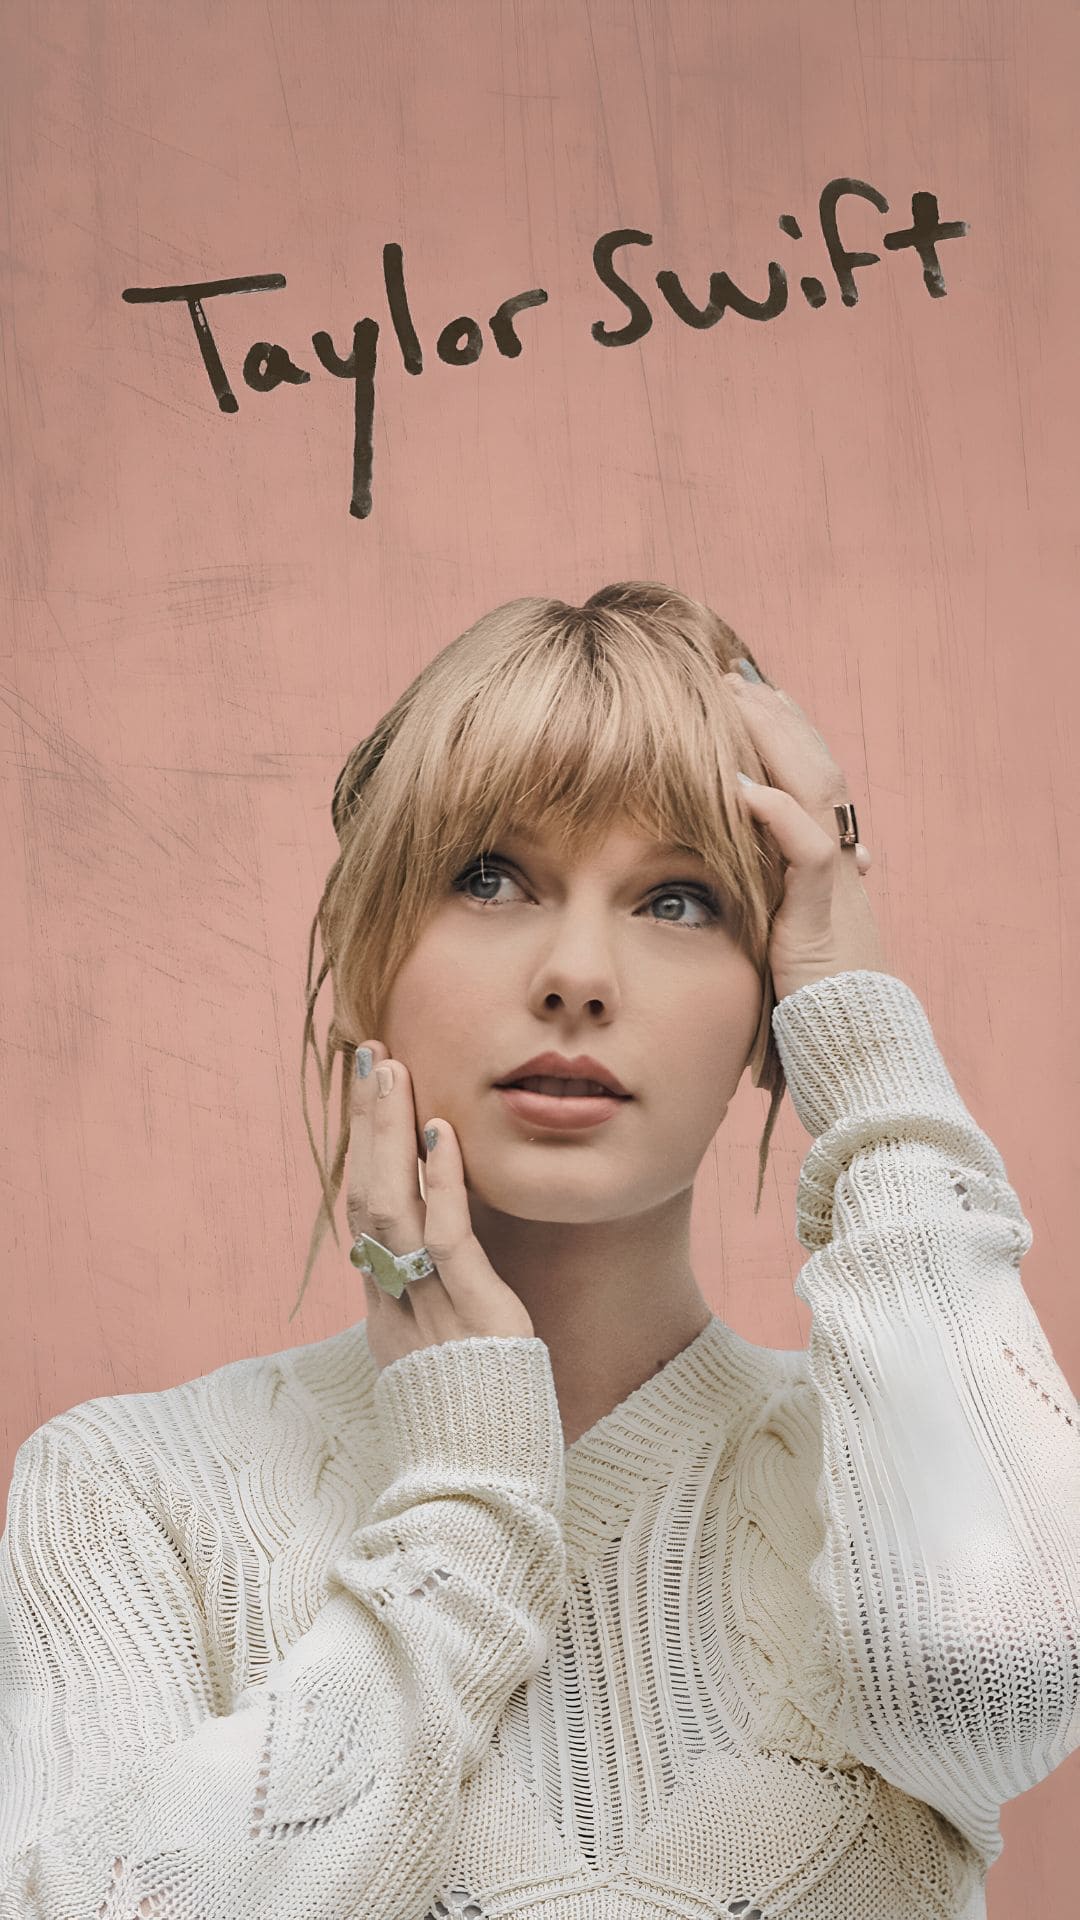 Cool Taylor Swift Wallpaper